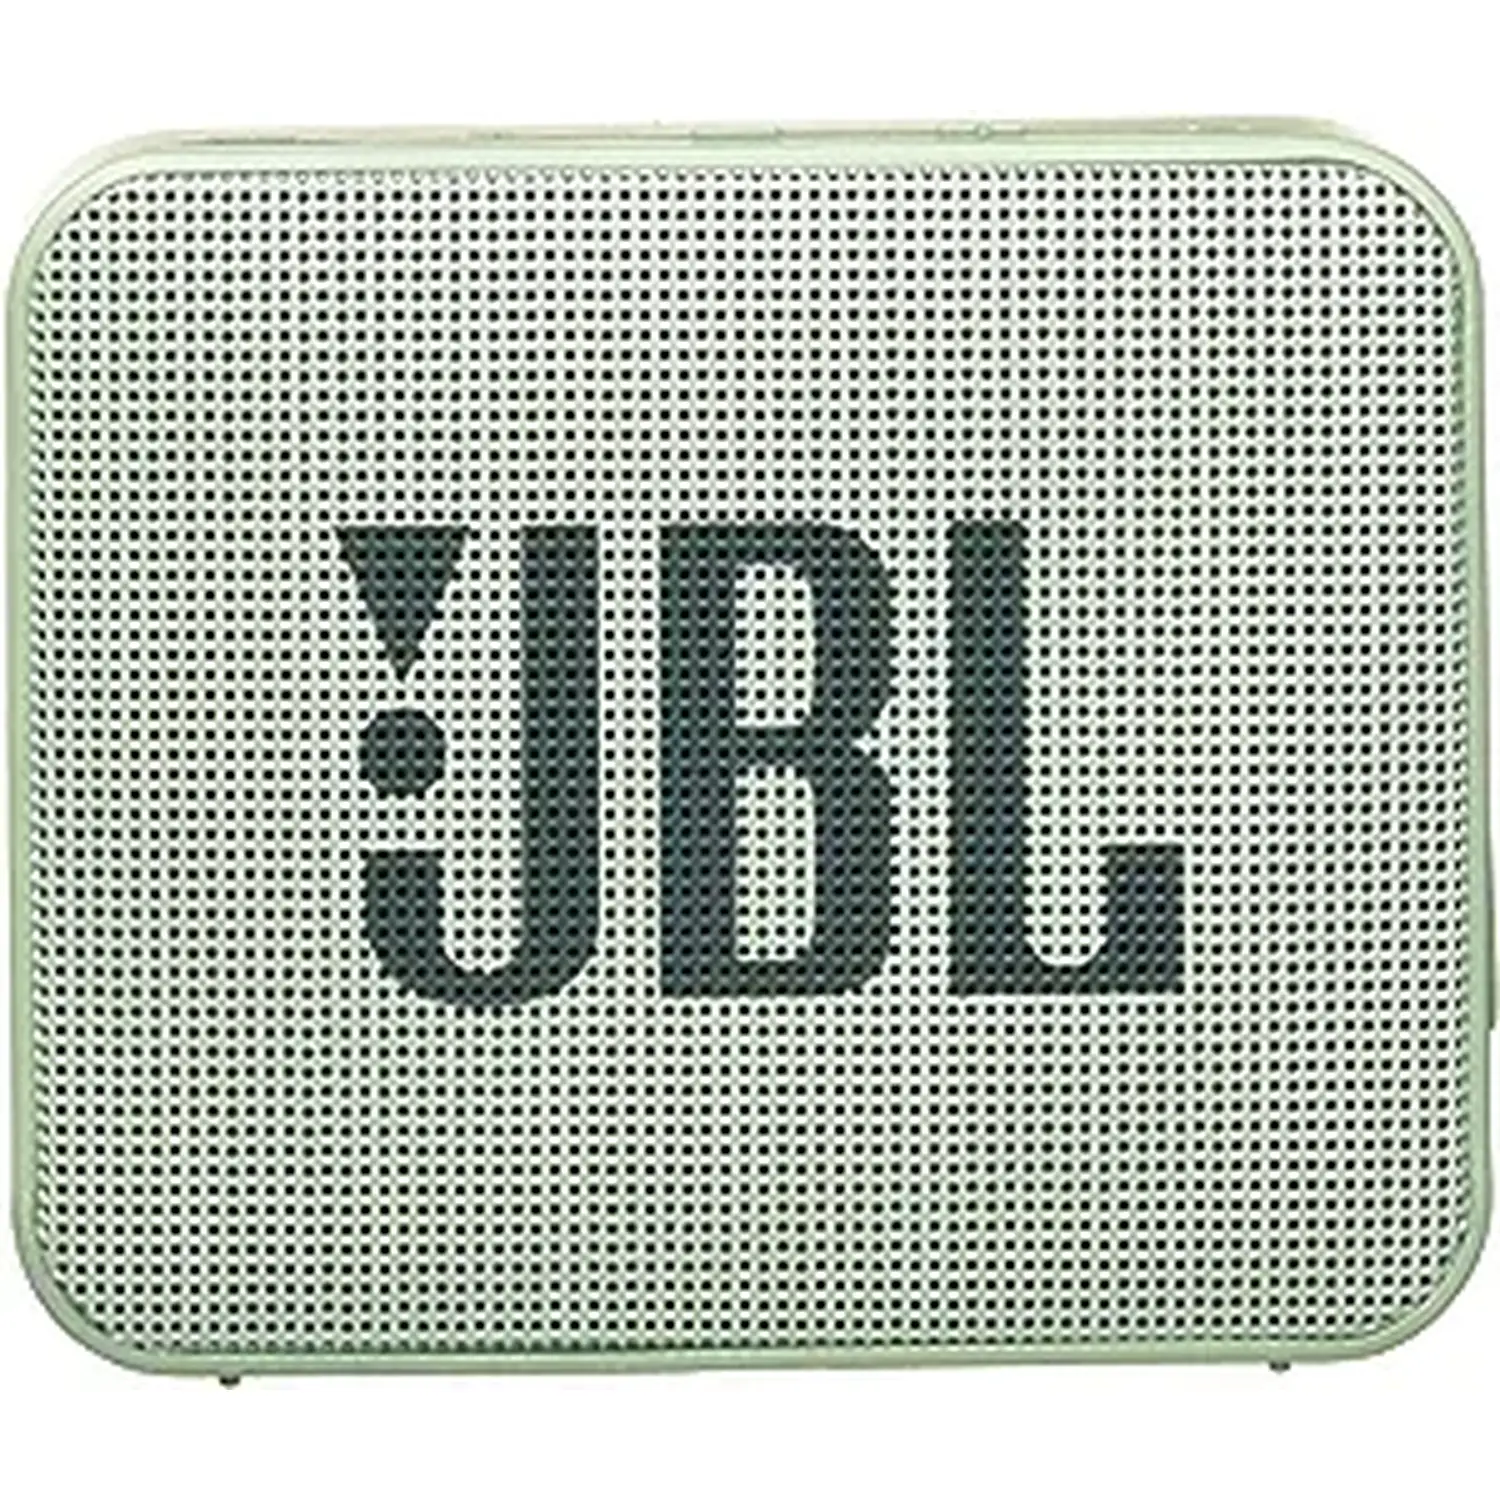 JBL GO 2 Portable Wireless Speaker - Mint, Bluetooth